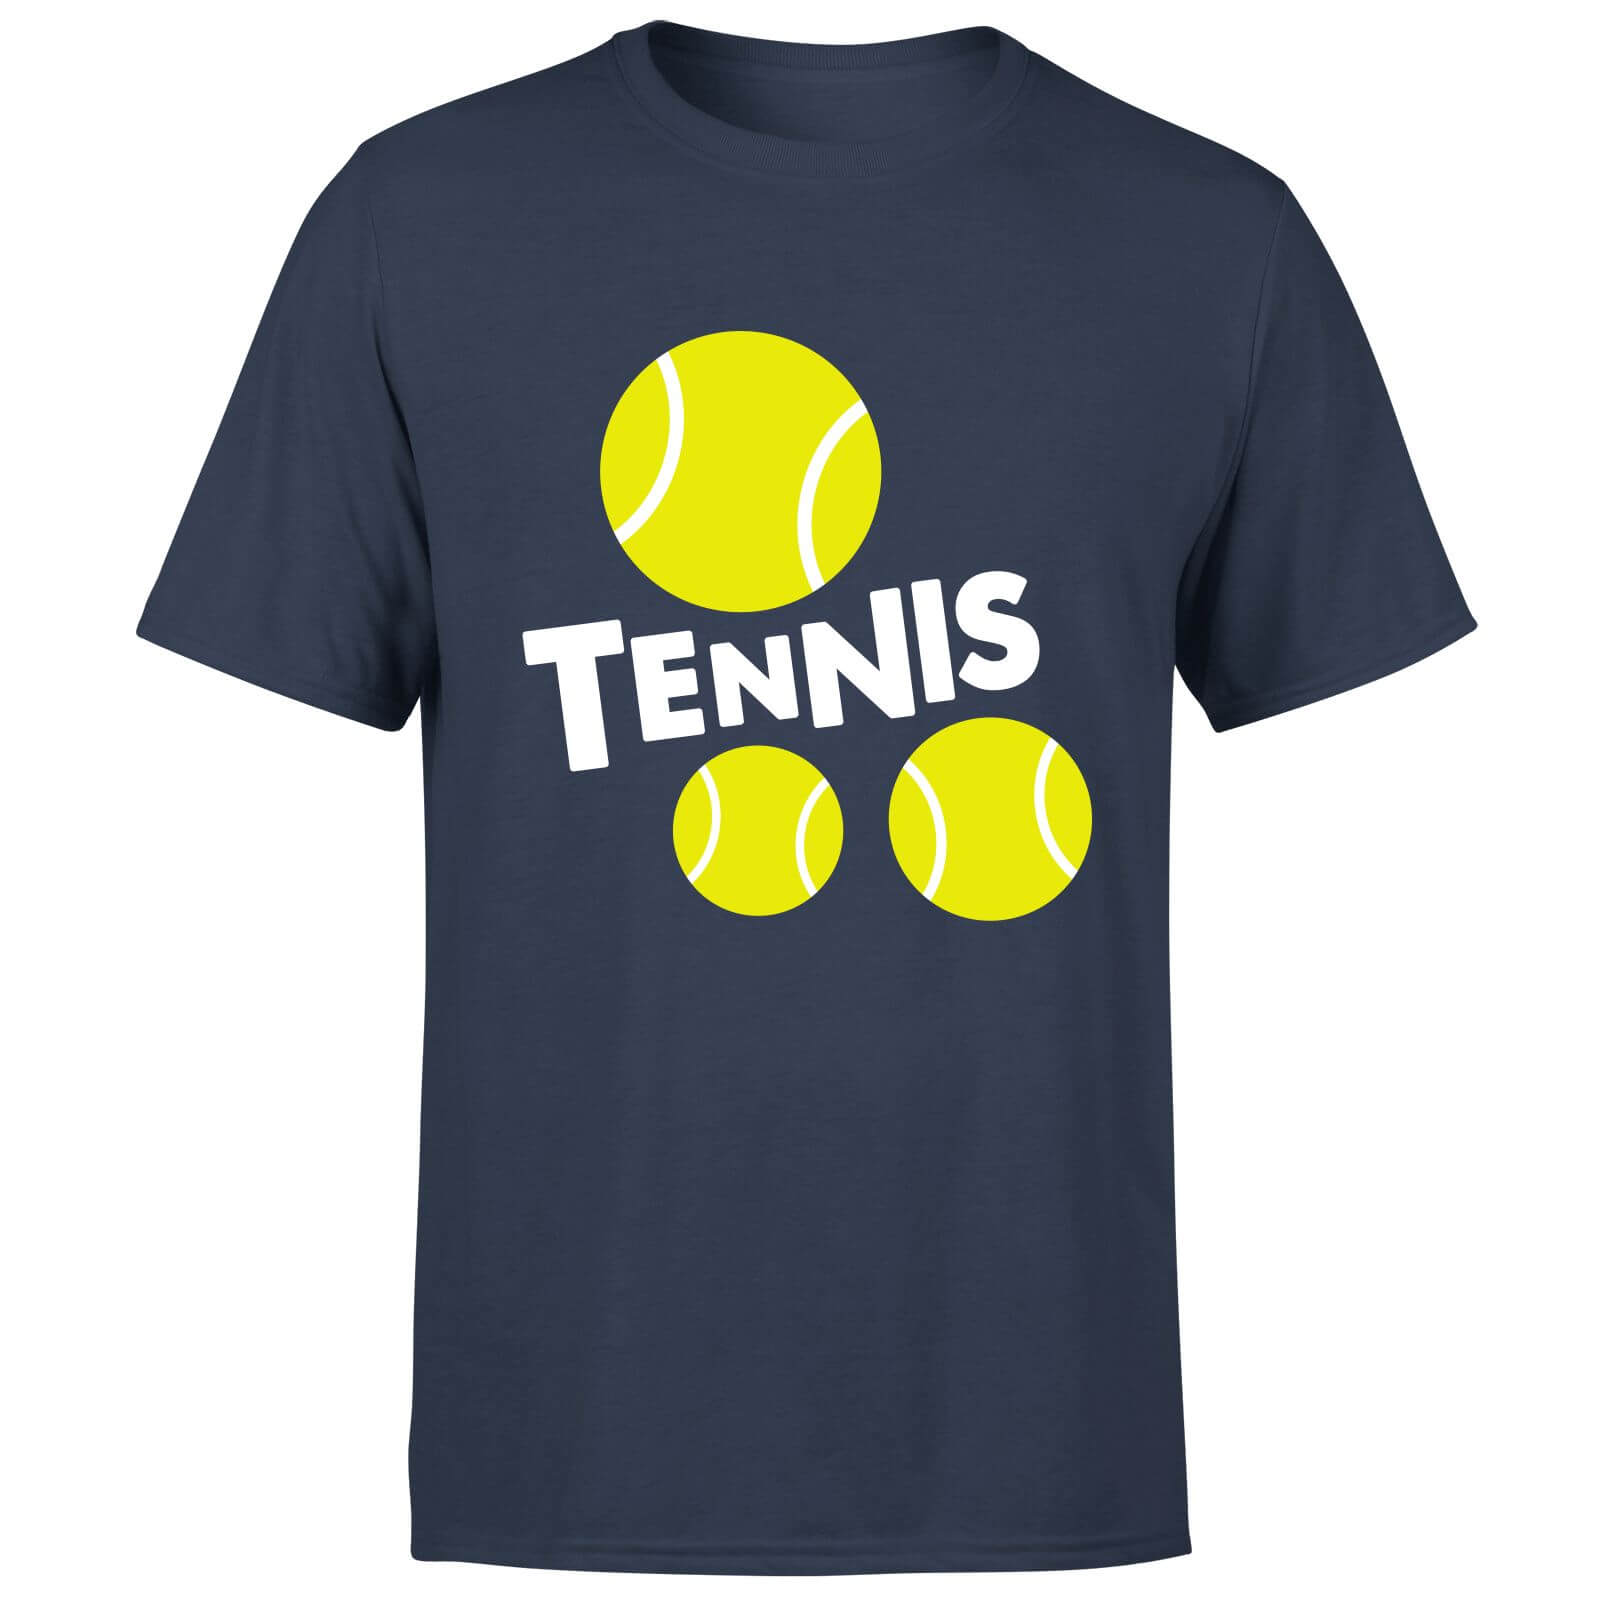 Tennis Balls T Shirt   Navy   S   Navy